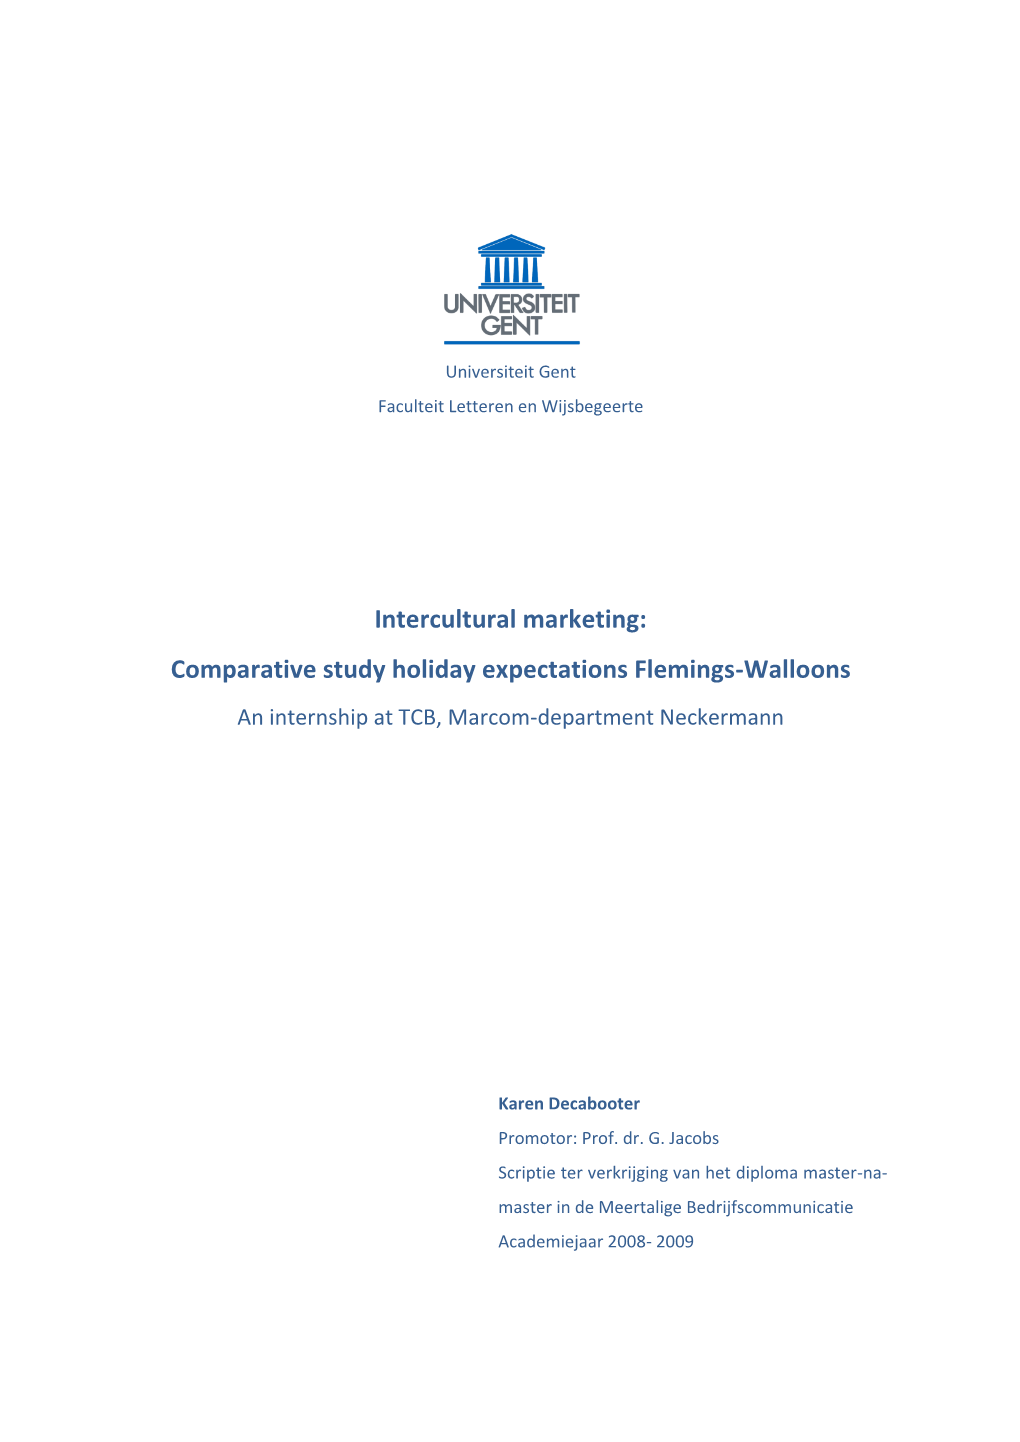 Intercultural Marketing: Comparative Study Holiday Expectations Flemings-Walloons an Internship at TCB, Marcom-Department Neckermann